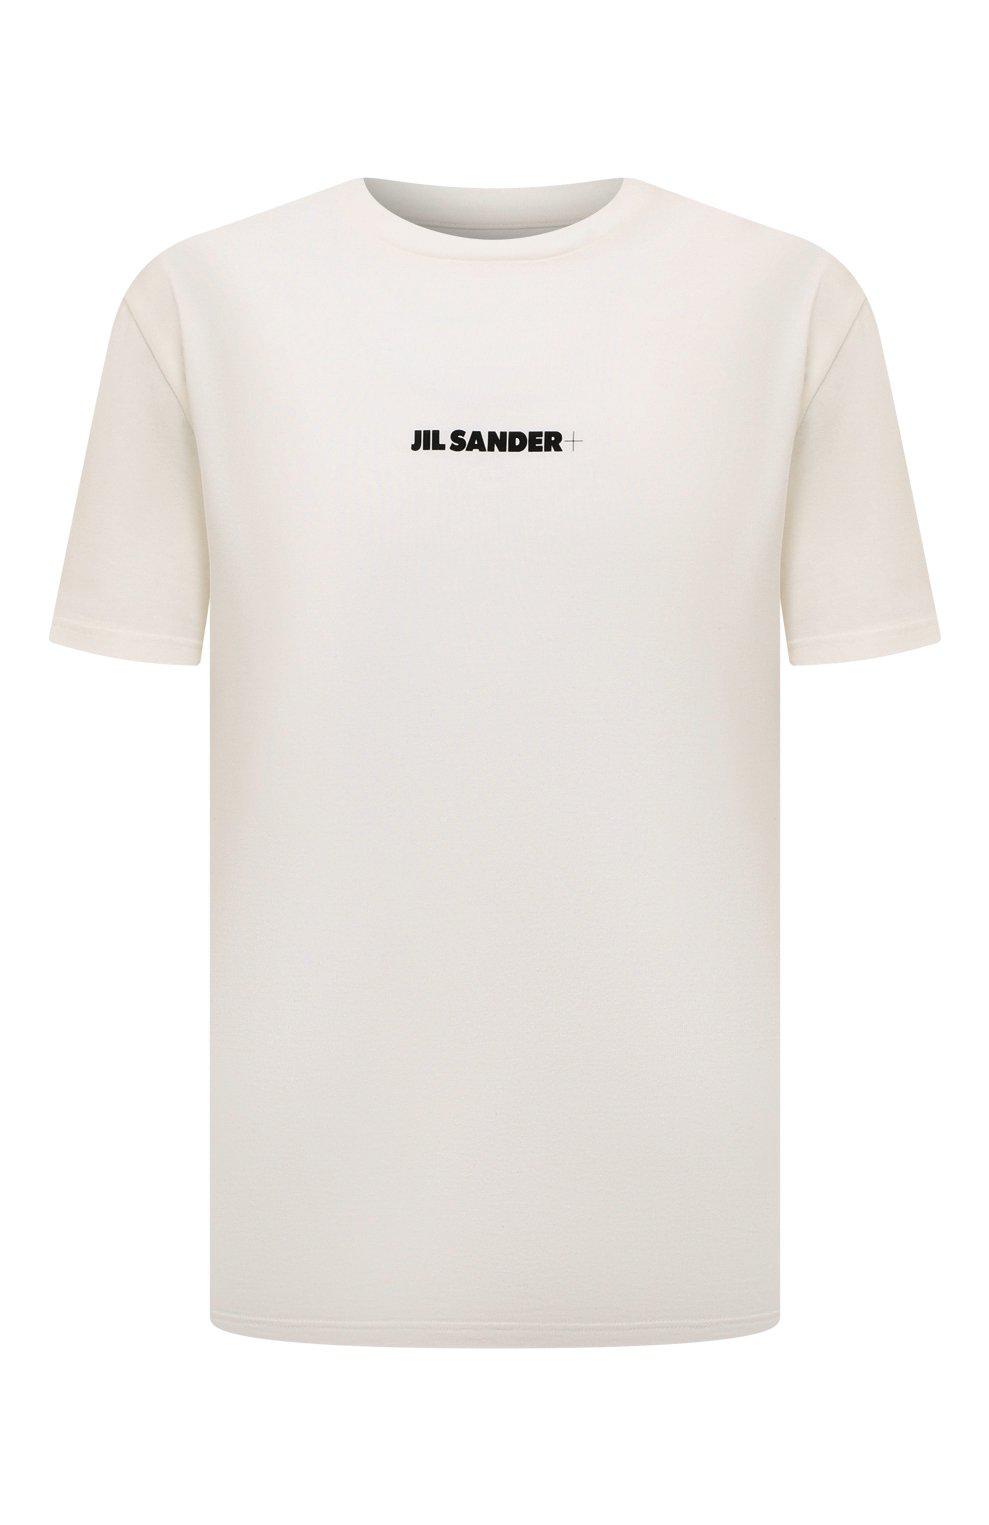 Хлопковая футболка, Jil Sander, 46 500 руб.